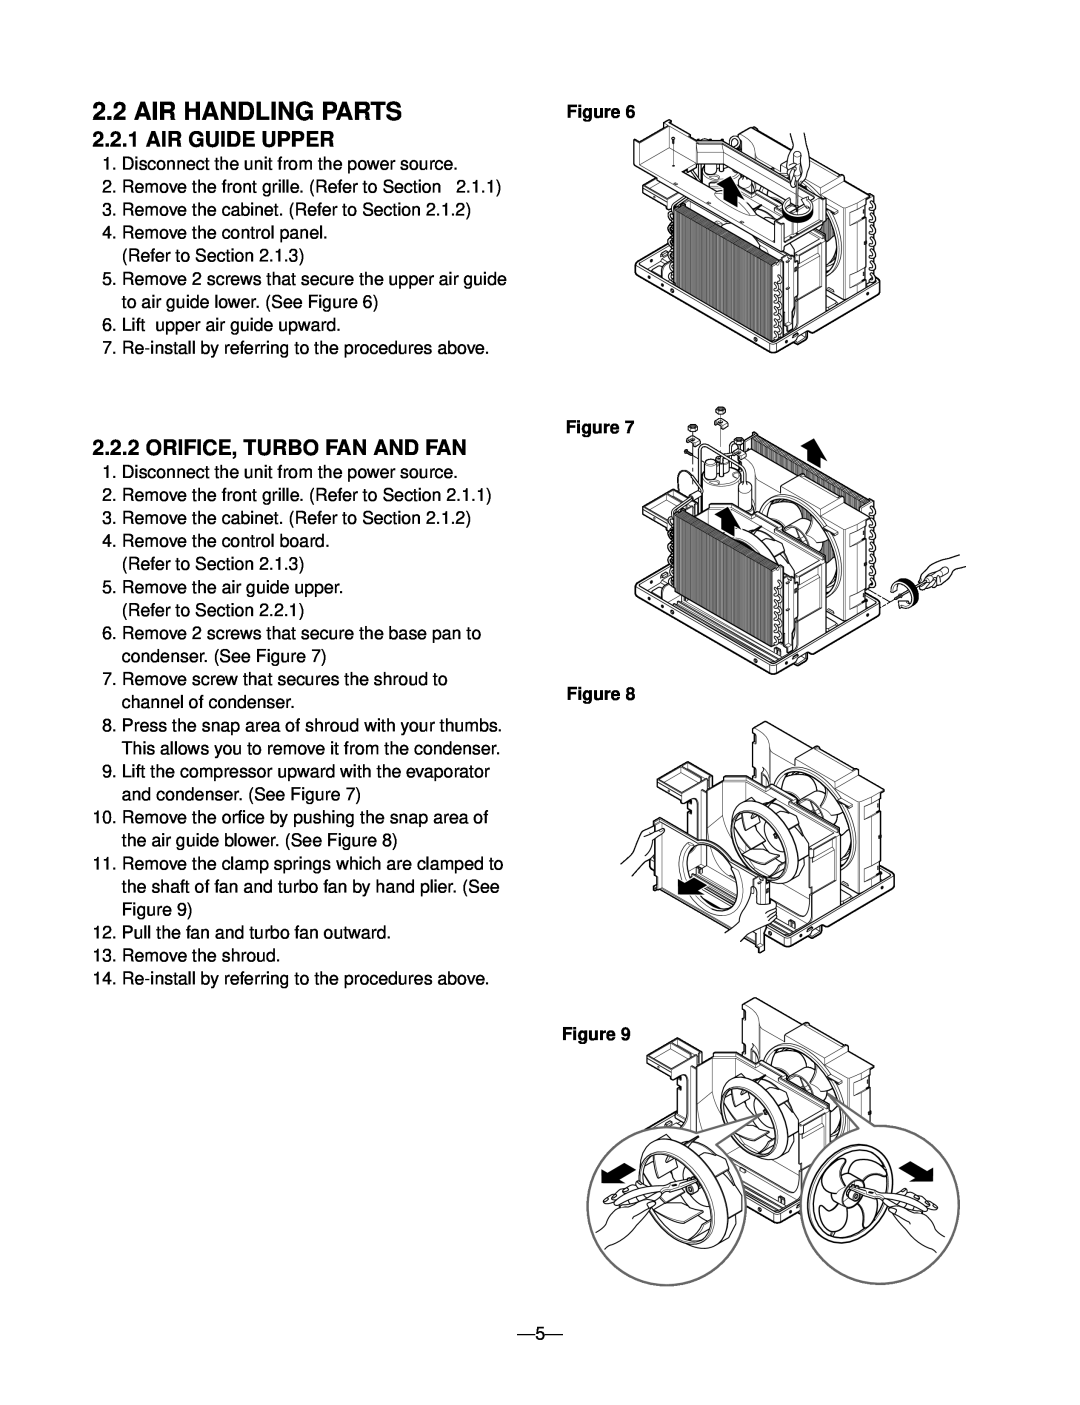 Friedrich CP05N10A manual Air Handling Parts, Air Guide Upper, Orifice, Turbo Fan And Fan, Figure Figure Figure Figure 